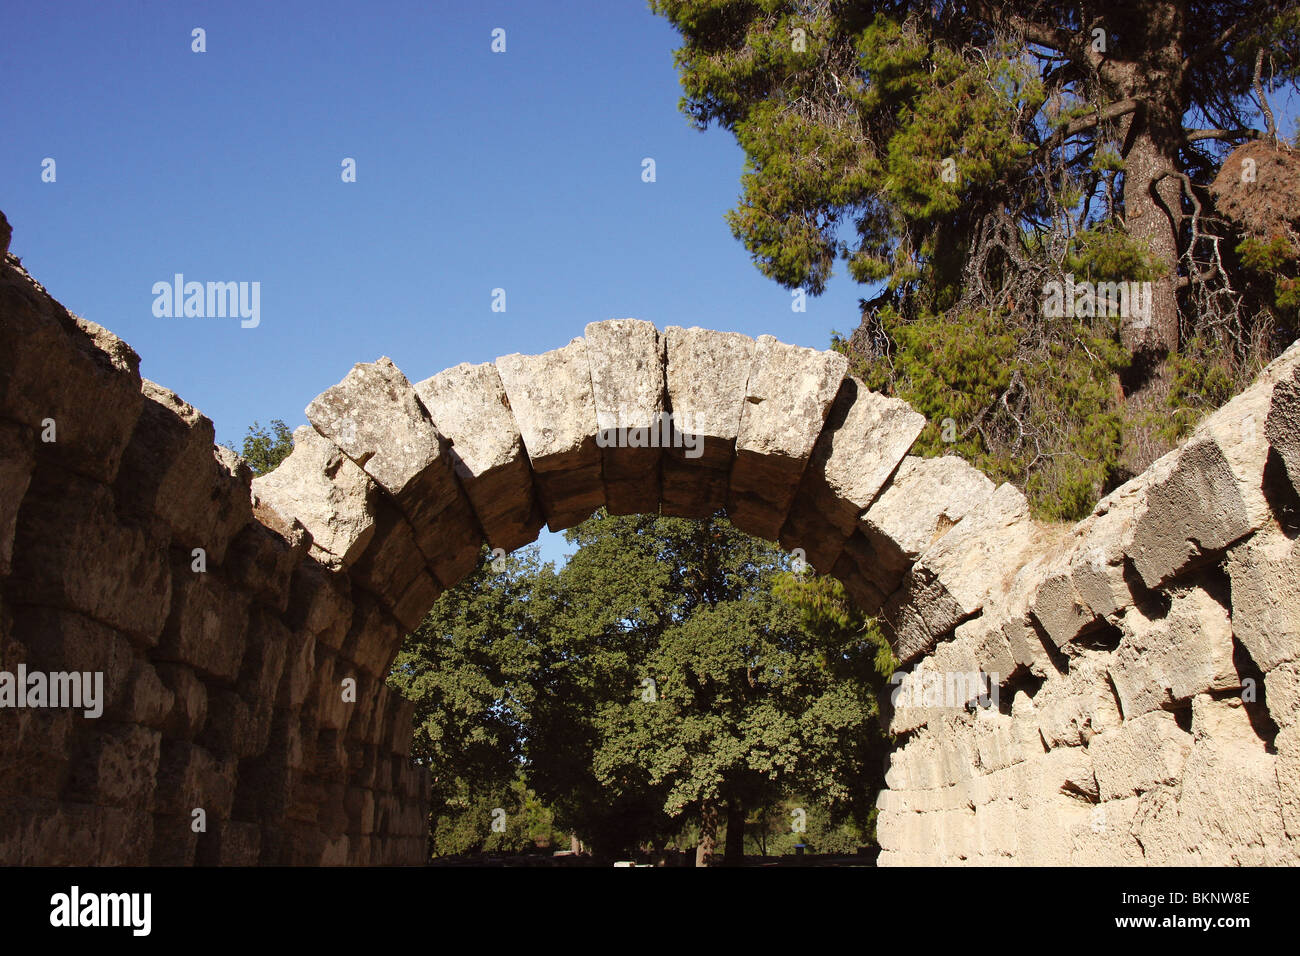 Santuario di Olympia. Ingresso allo stadio olimpico. Arco in pietra. III A.C. Elis. Peloponneso. La Grecia. Foto Stock